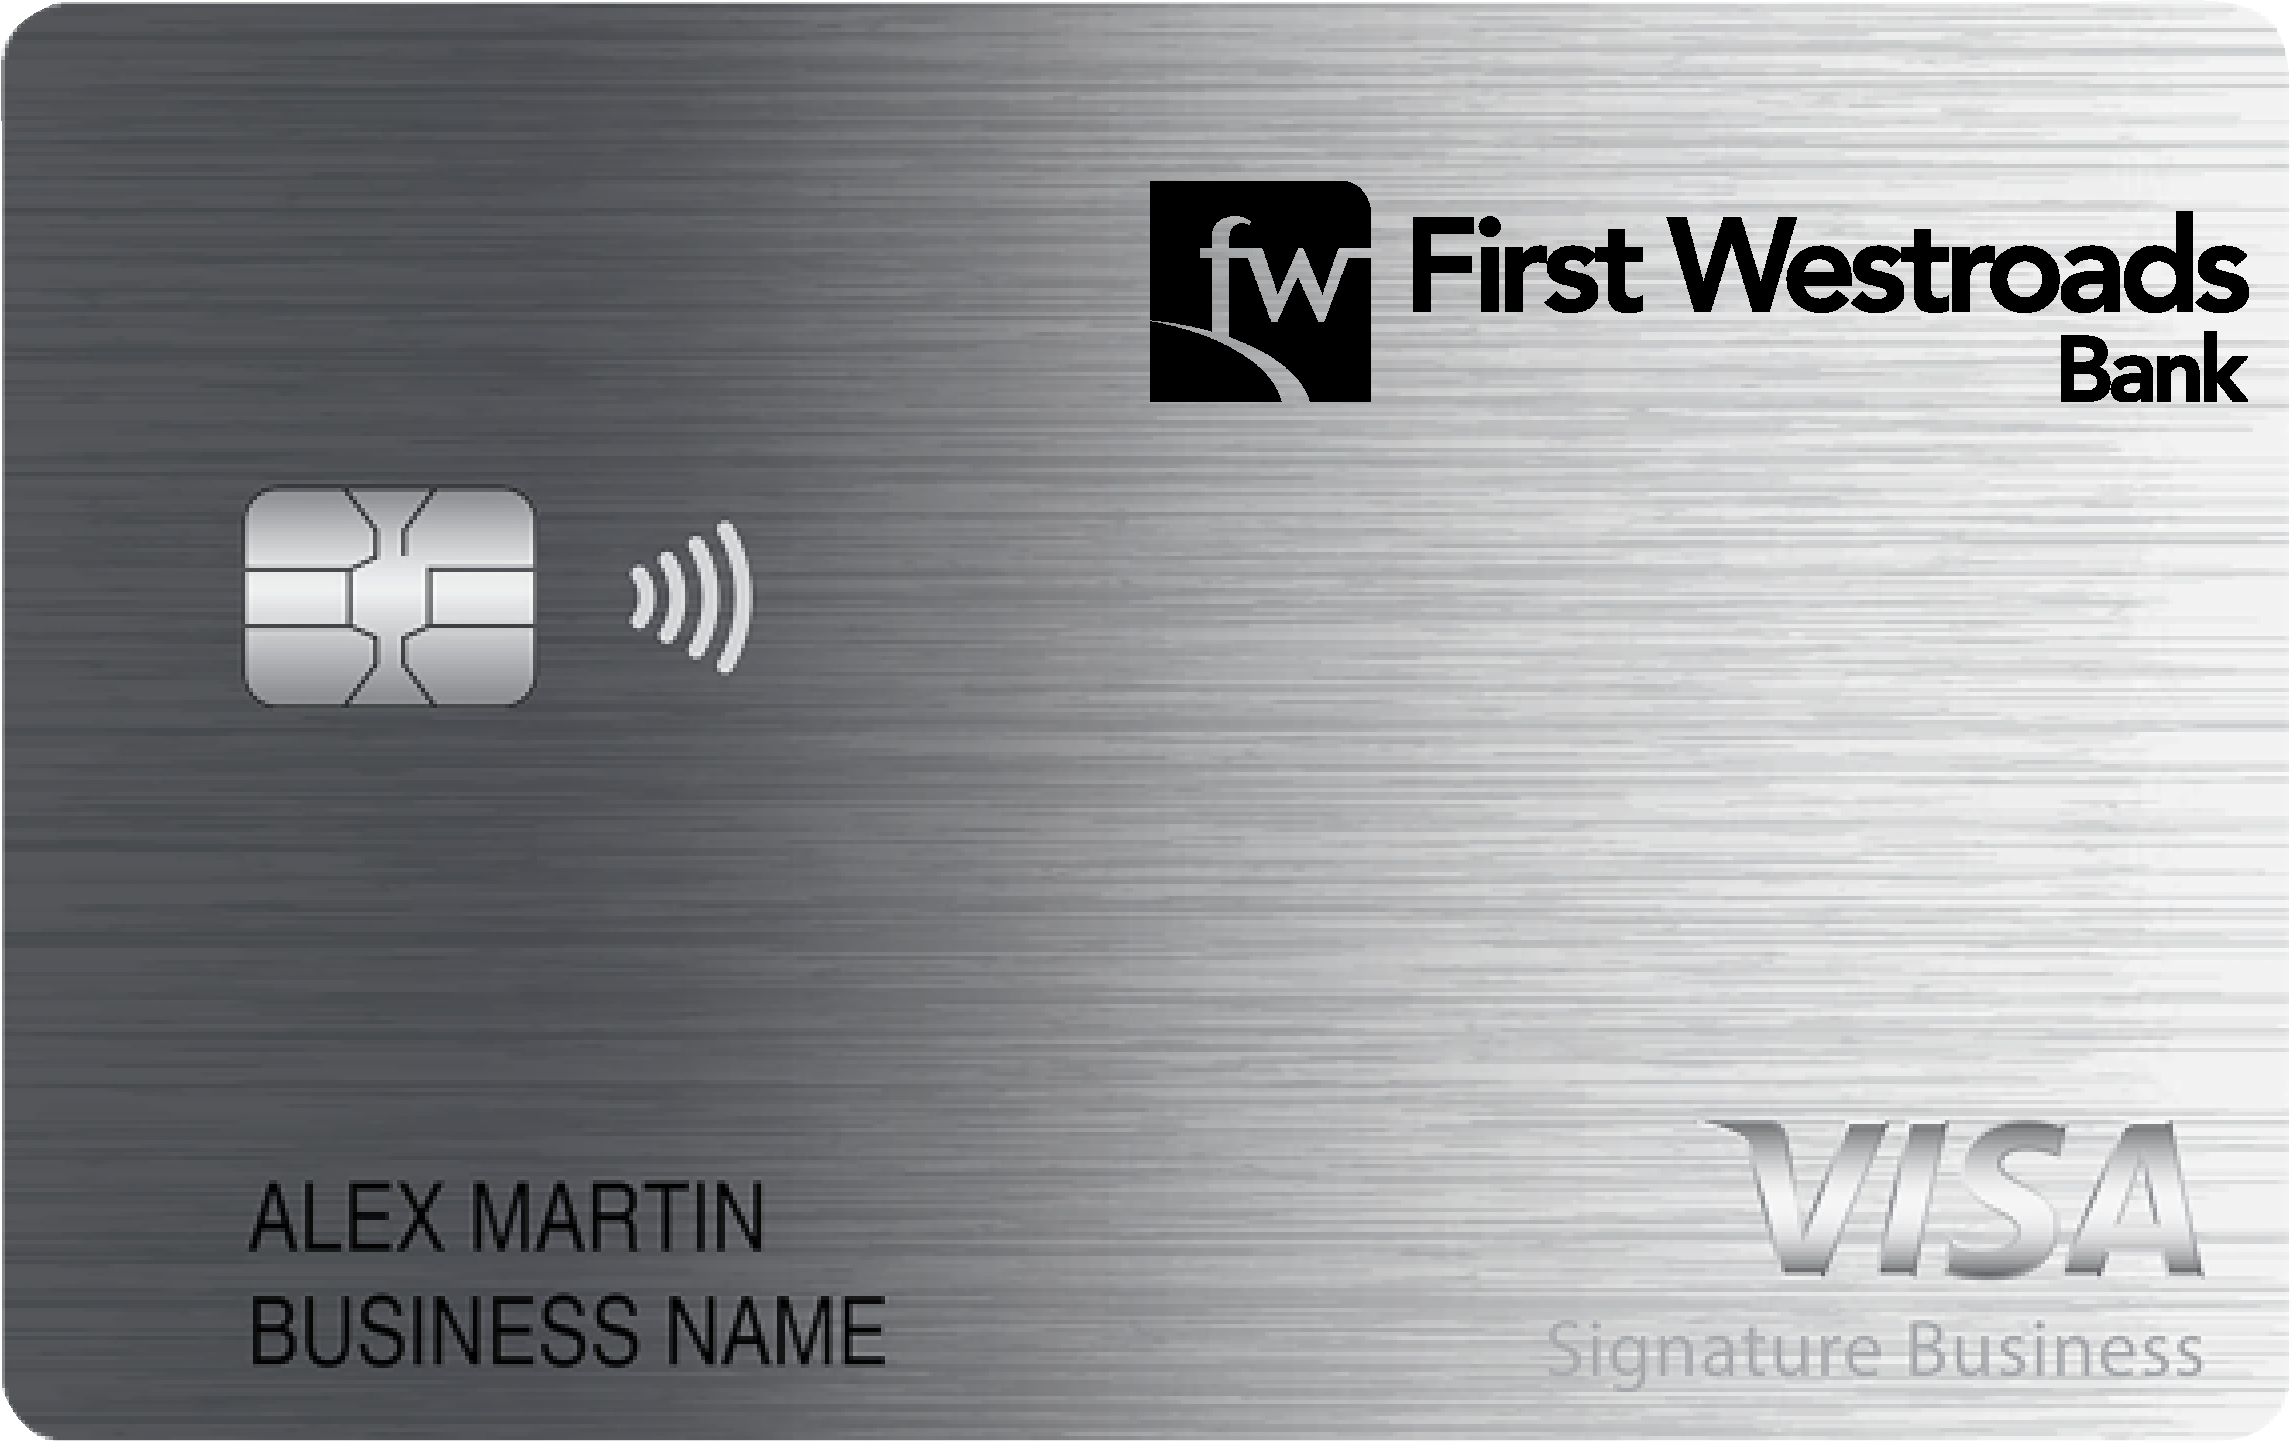 First Westroads Bank Smart Business Rewards Card